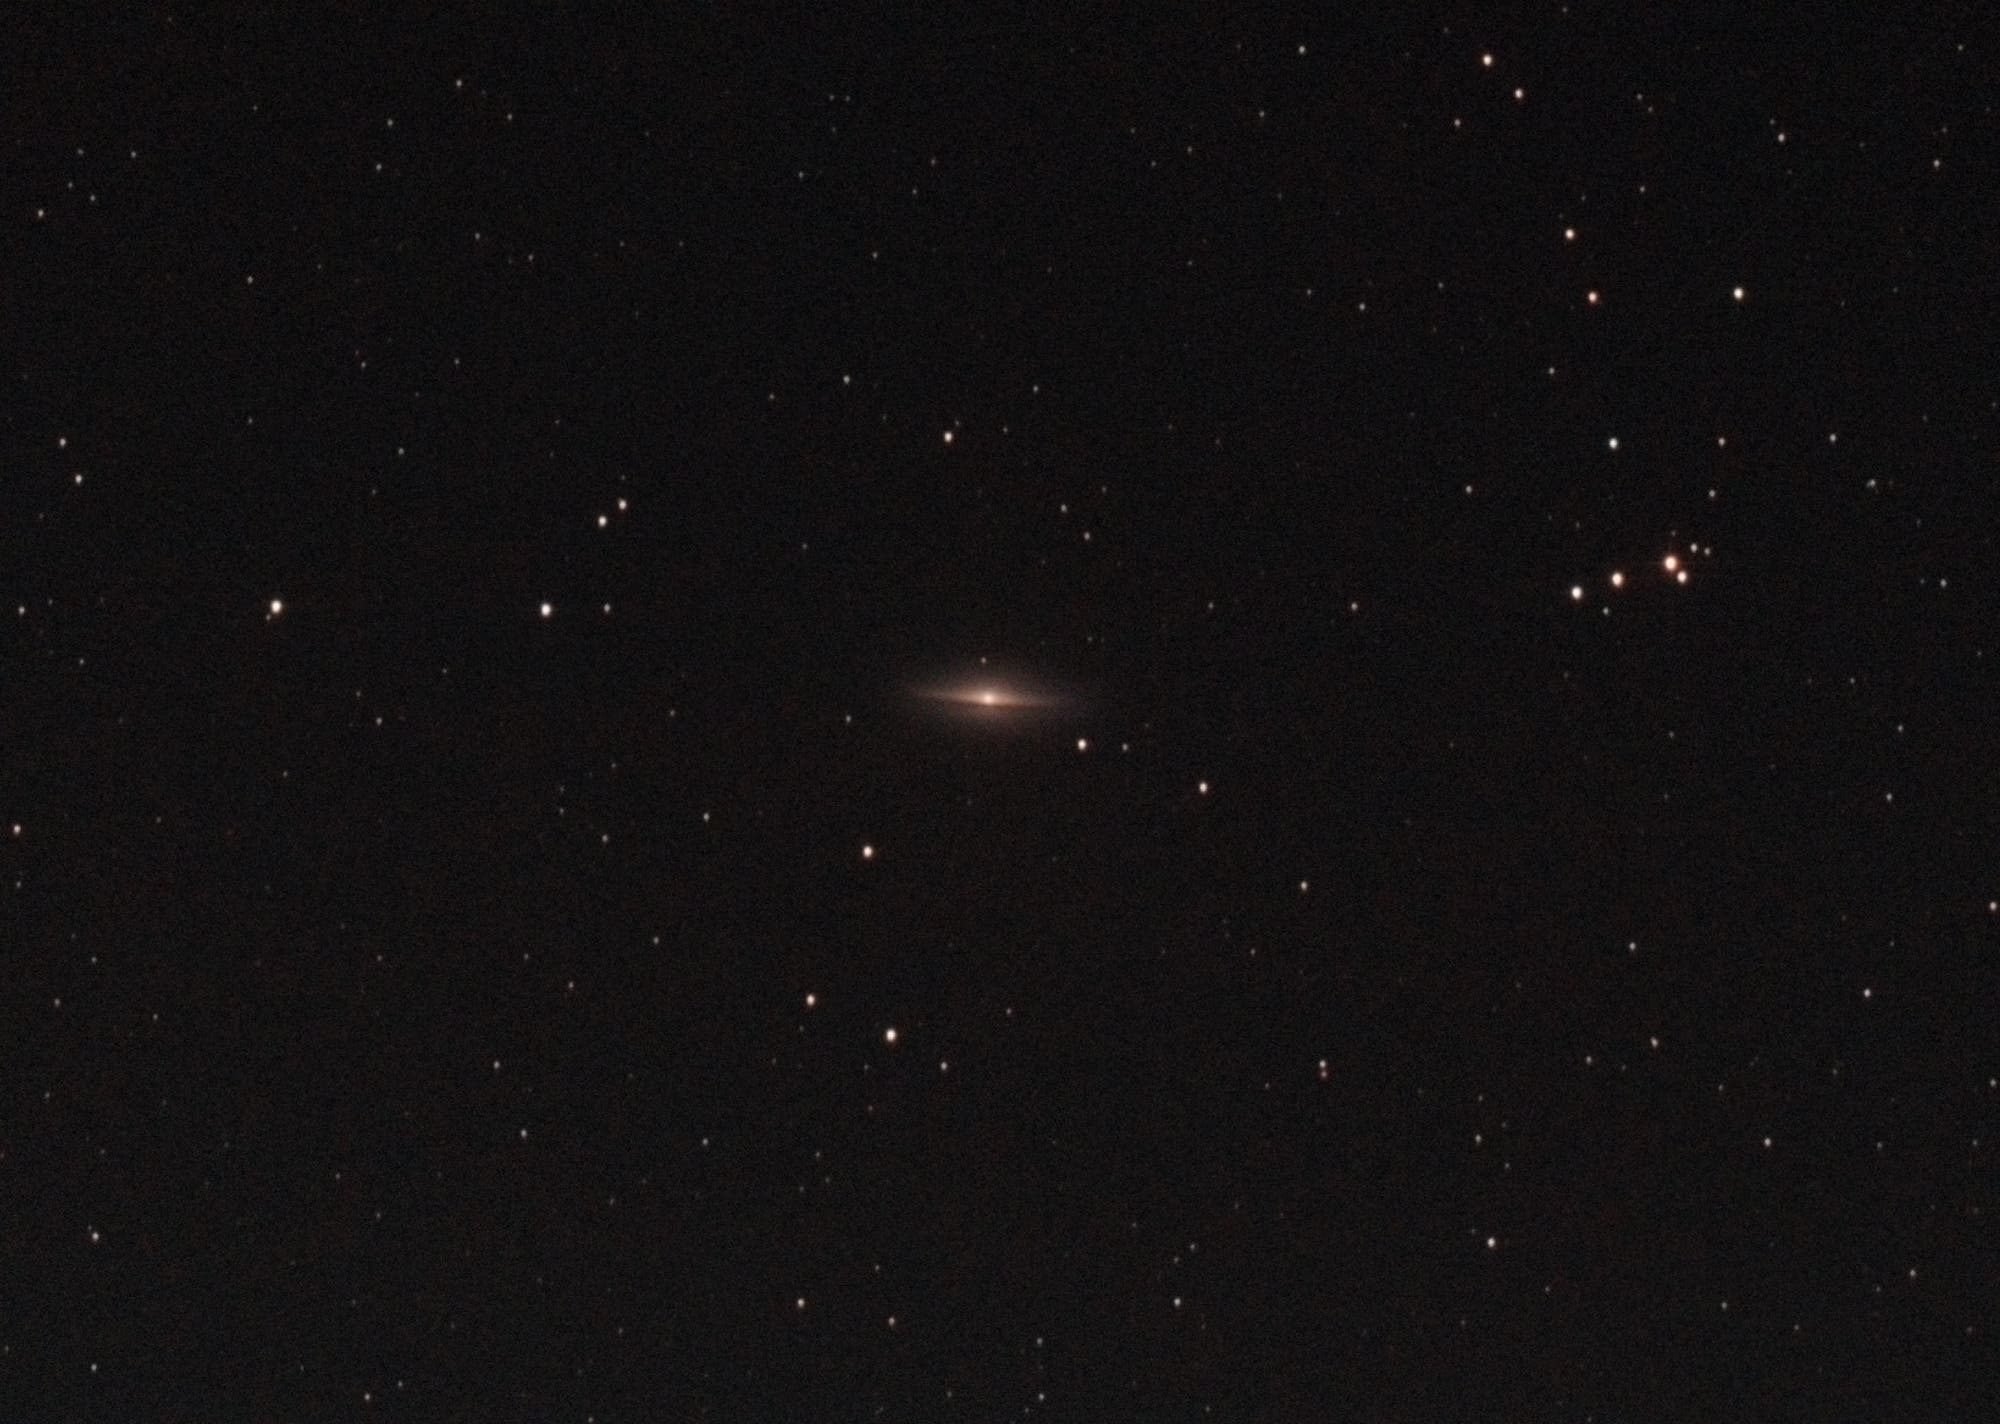 Sombrerogalaxie Messier 104 im Sternbild Jungfrau (Virgo)